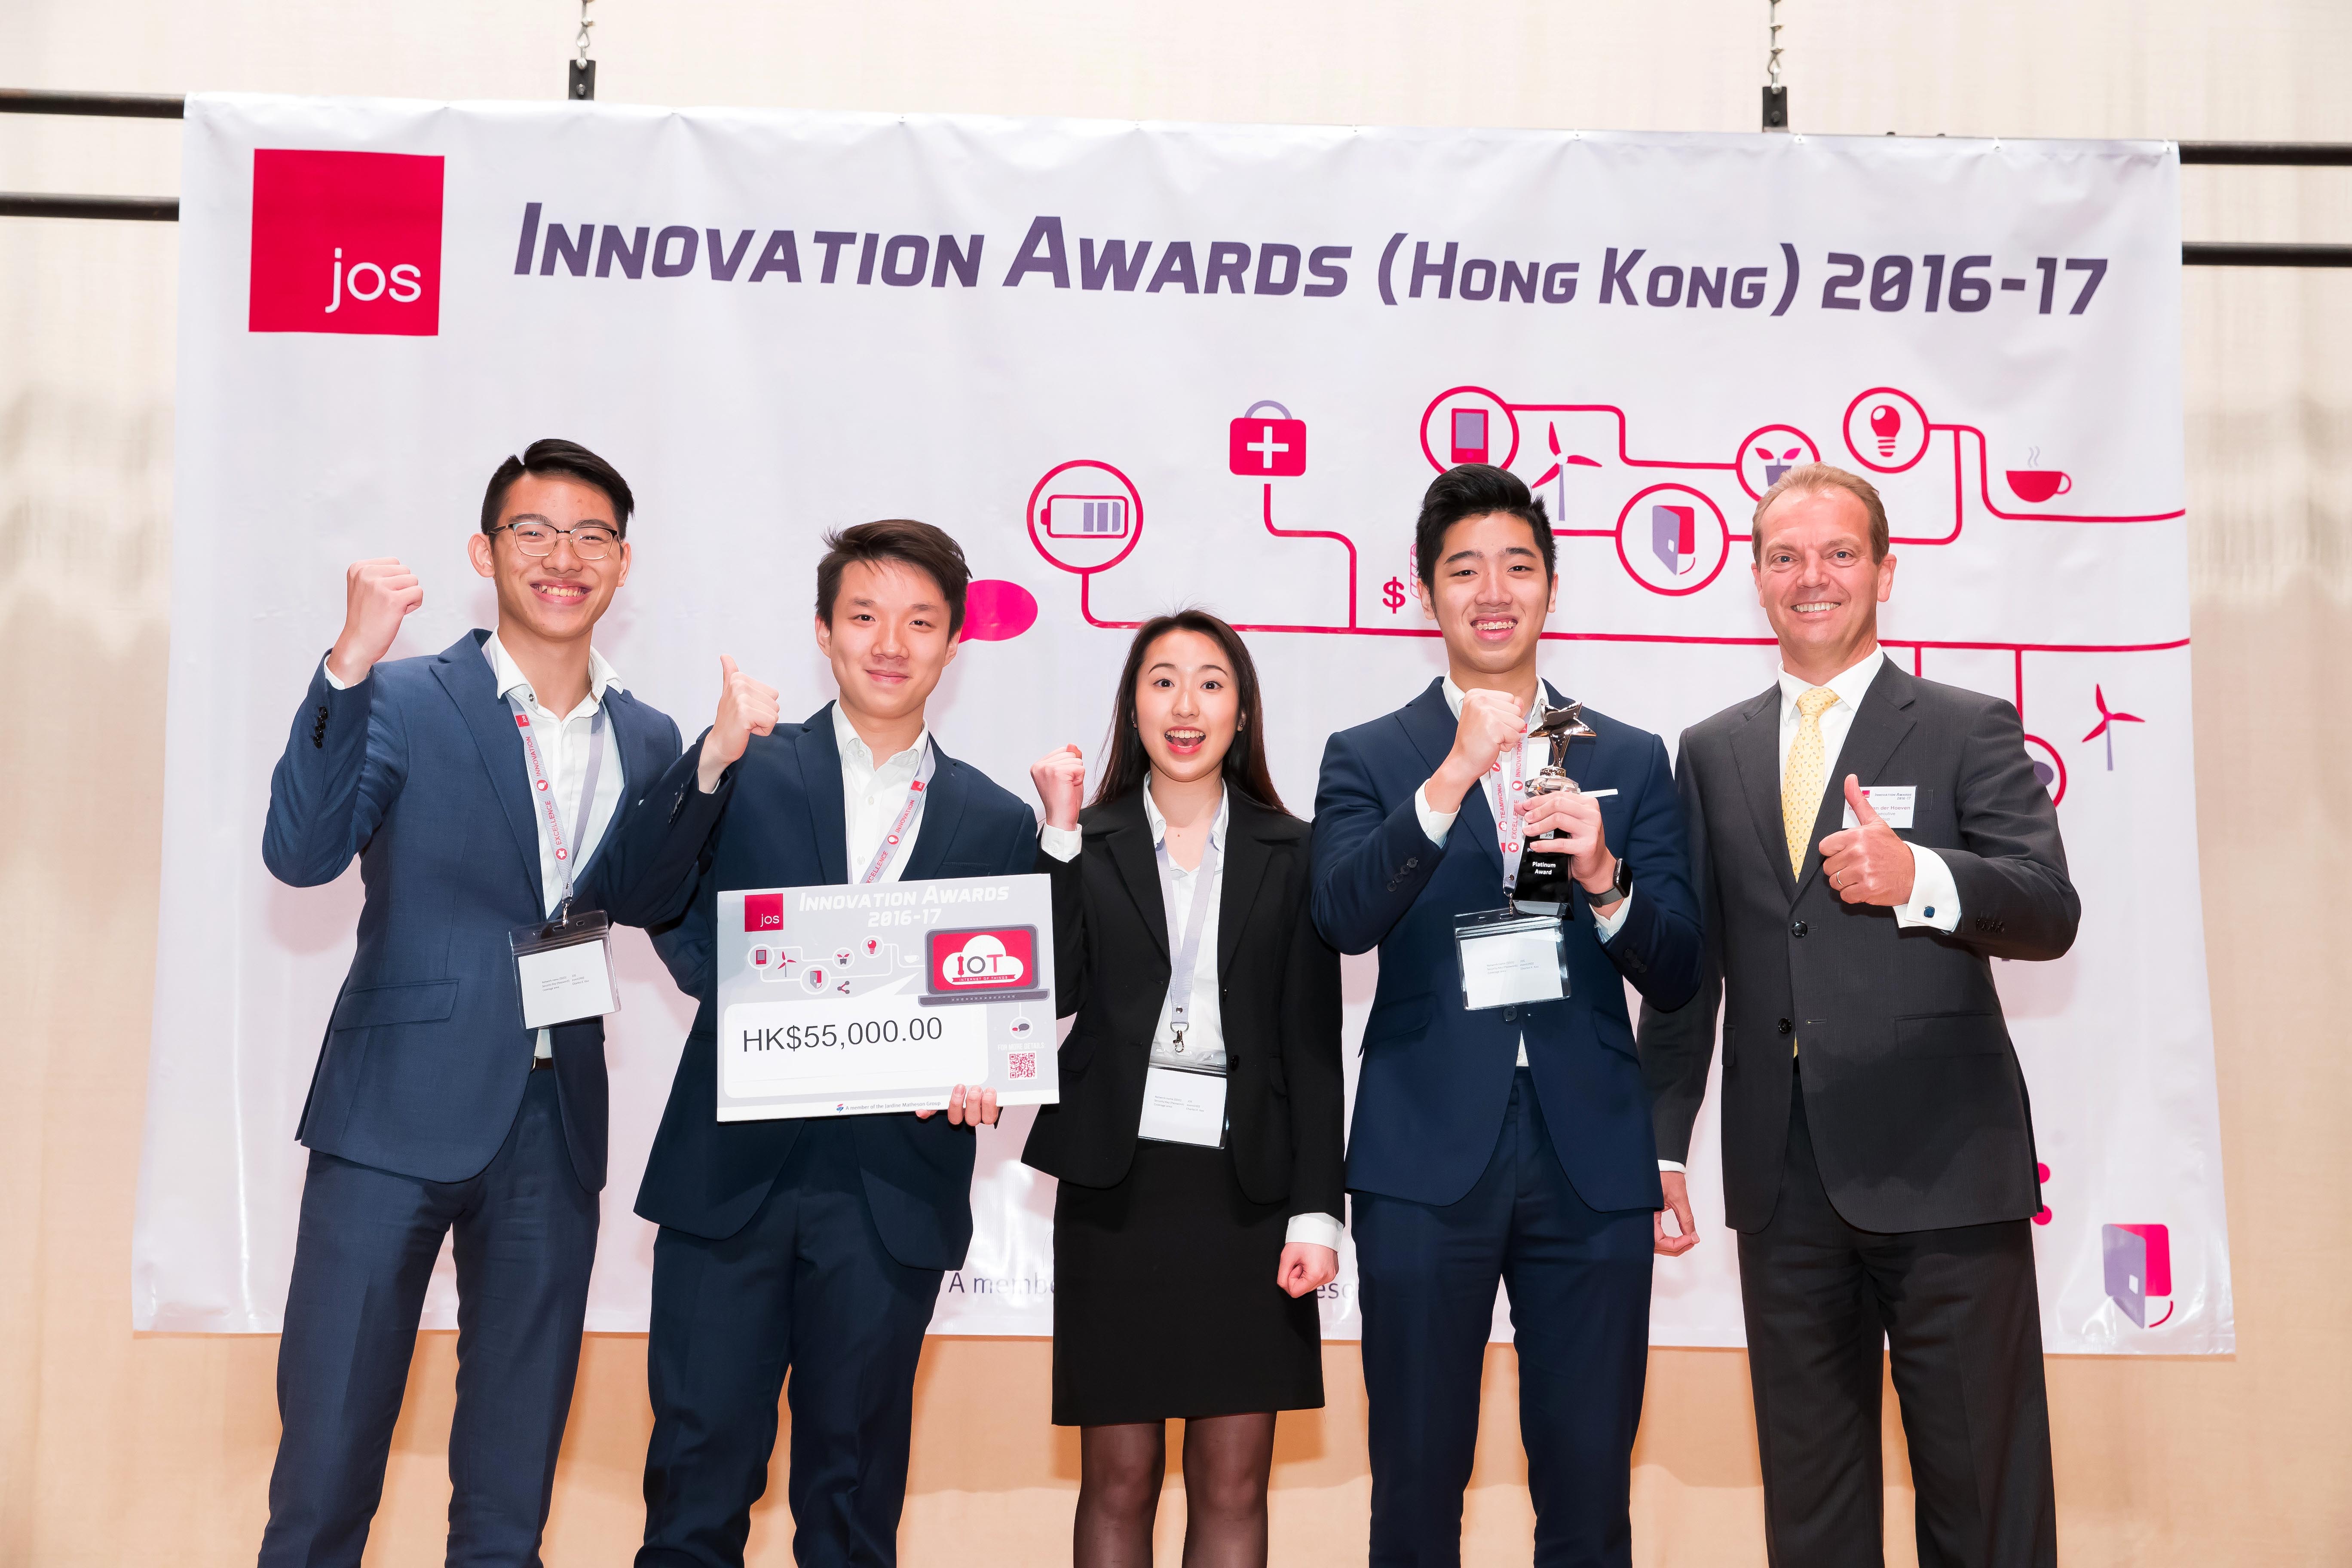 Winners of the Platinum Award at the JOS Innovation Awards 2016-2017